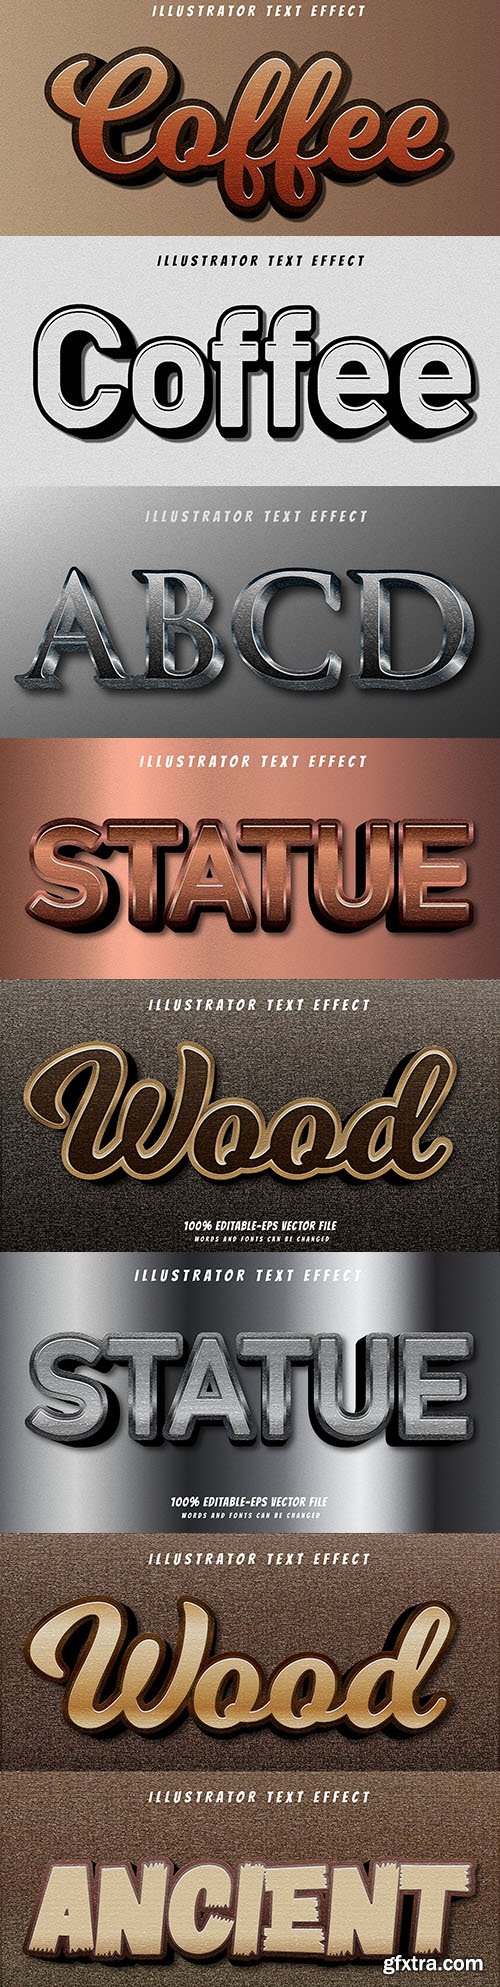 Editable font effect text collection illustration design 188